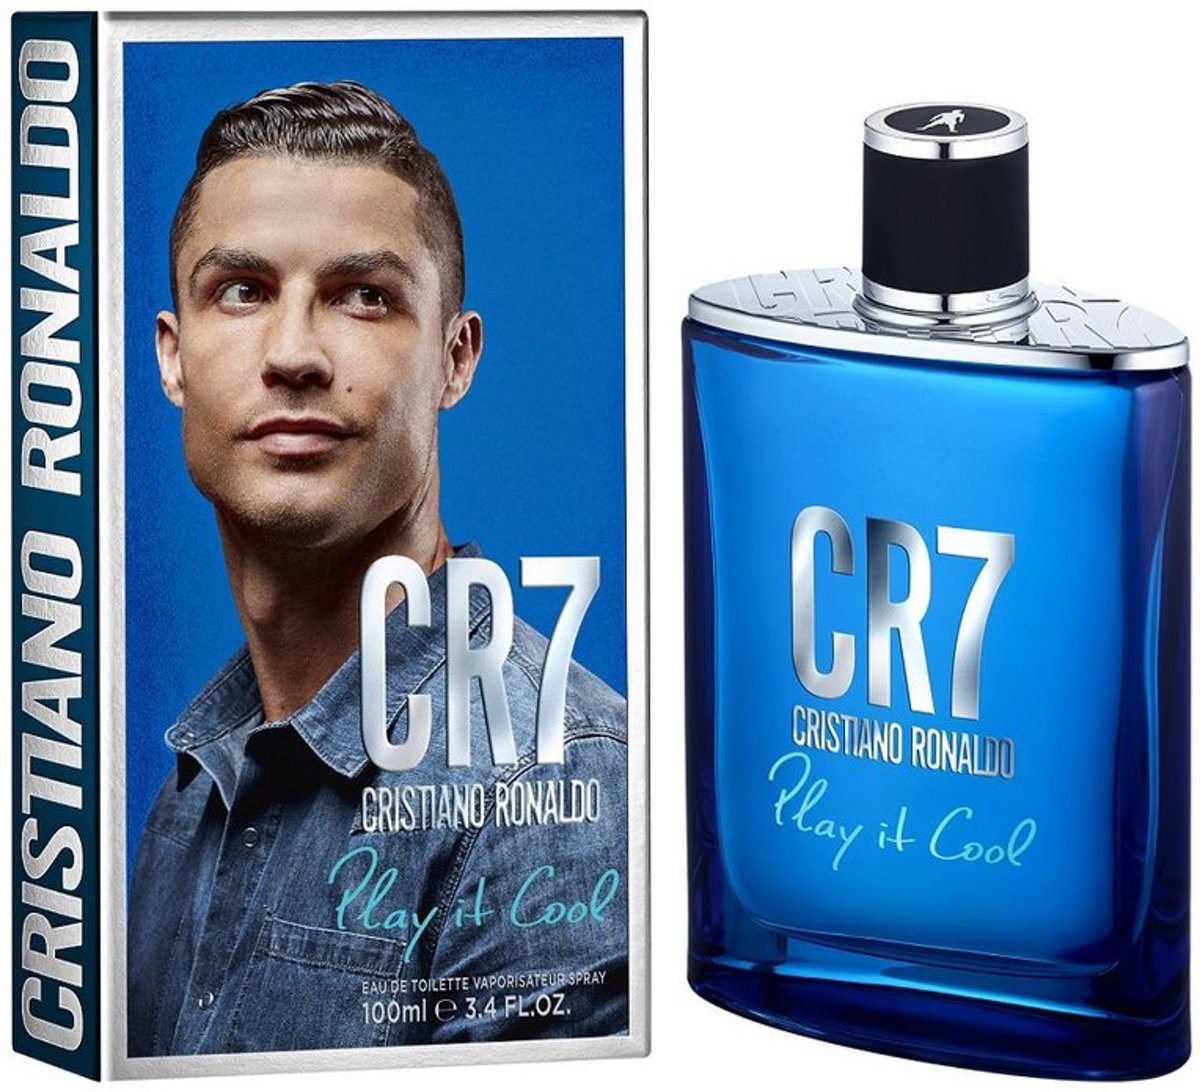 Cristiano Ronaldo CR7 Play It Cool - Eau de toilette spray - 3.4 oz, 1 –  Rafaelos